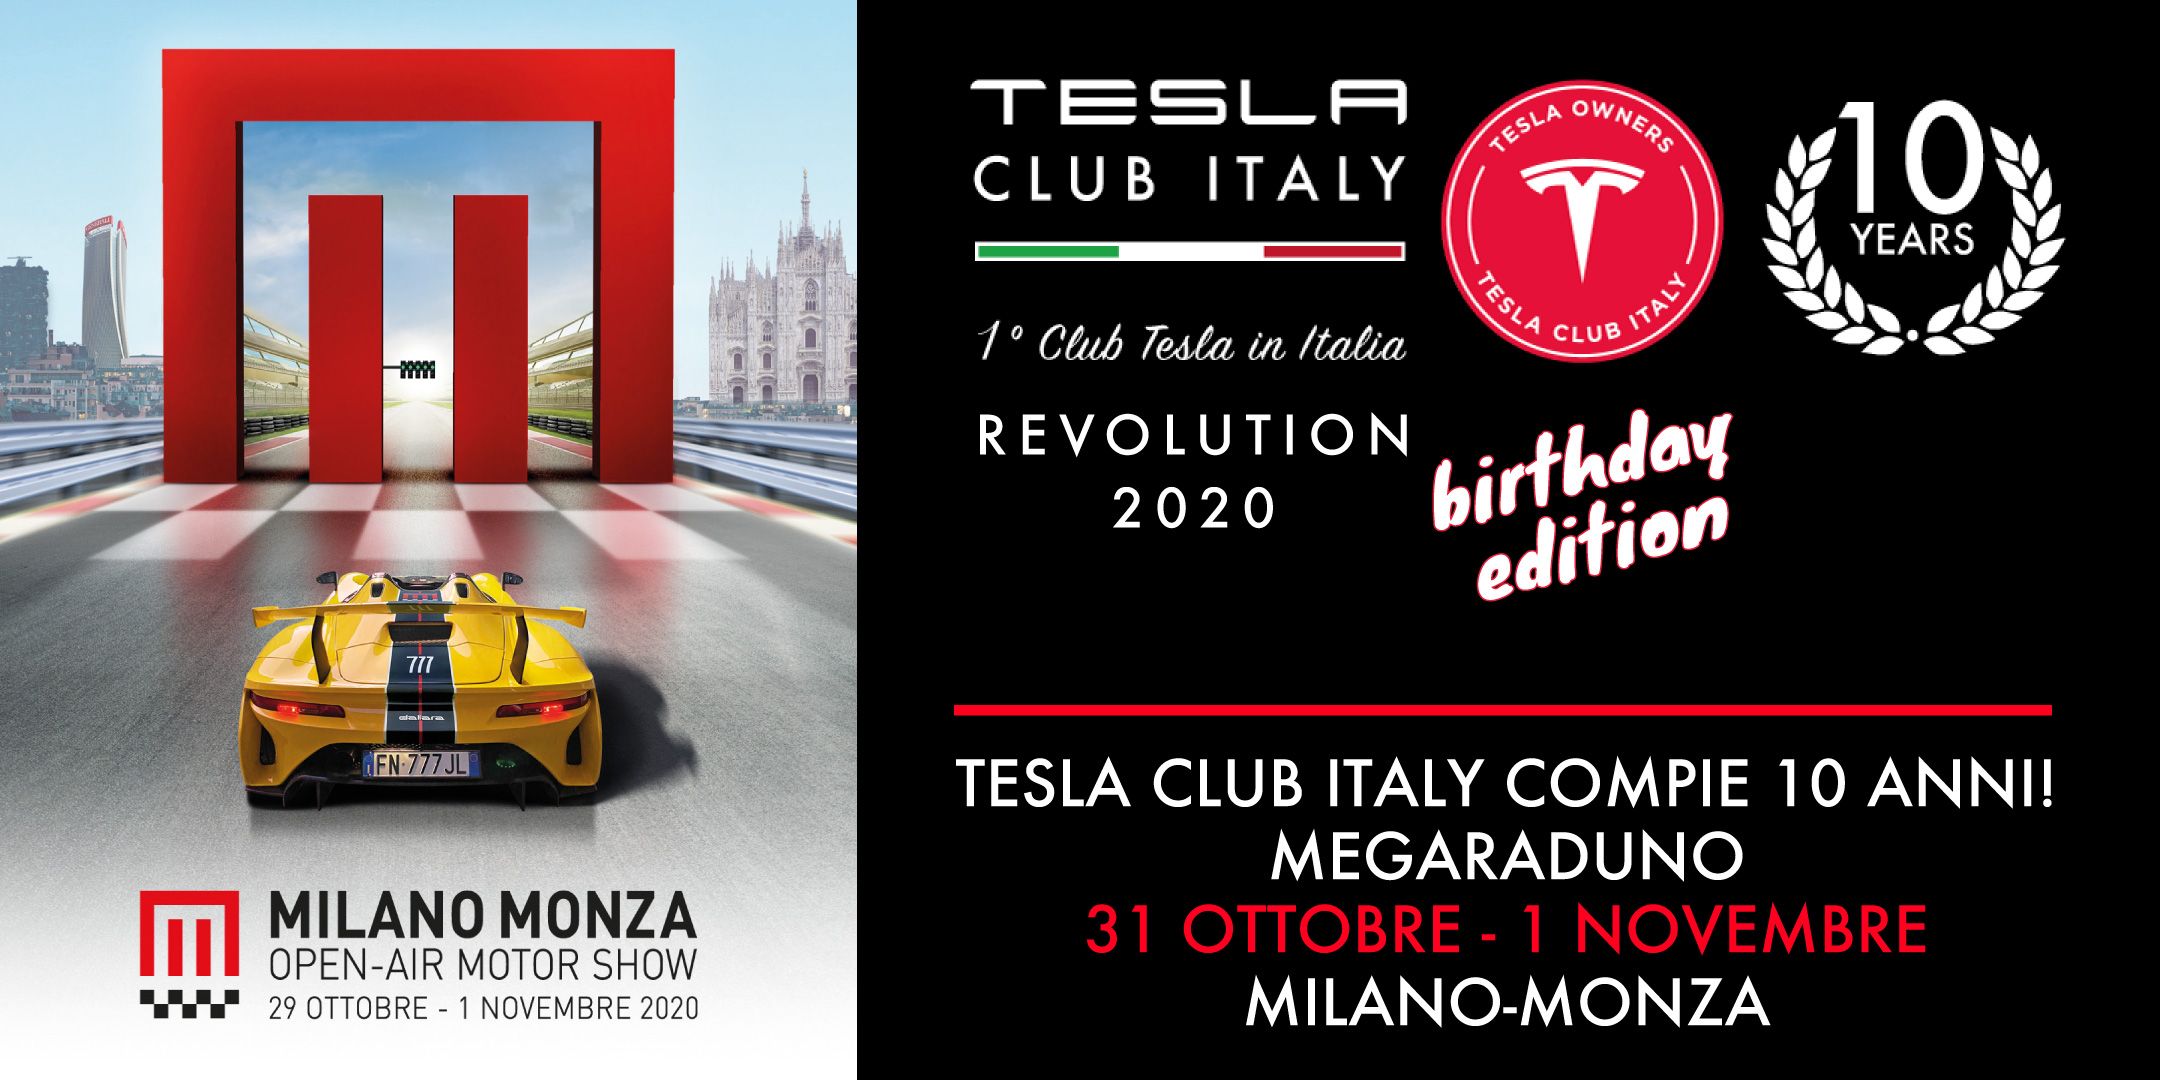 Club Tesla Italia Archives - Tesla Club Italy Revolution